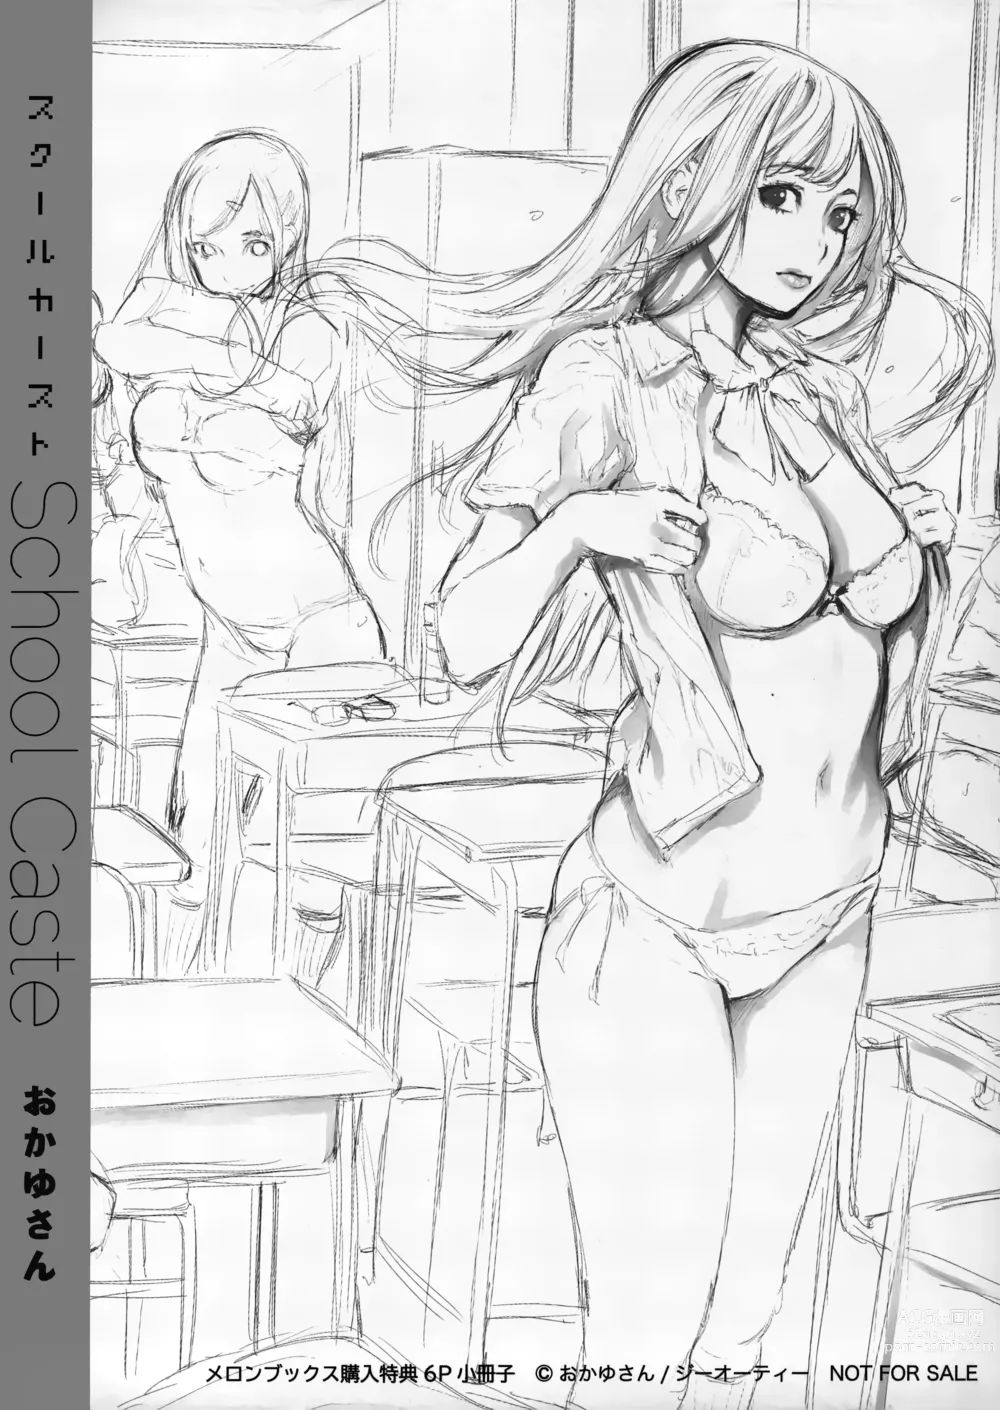 Page 6 of manga School Caste Melonbooks Kounyu Tokuten 6P Shousasshi